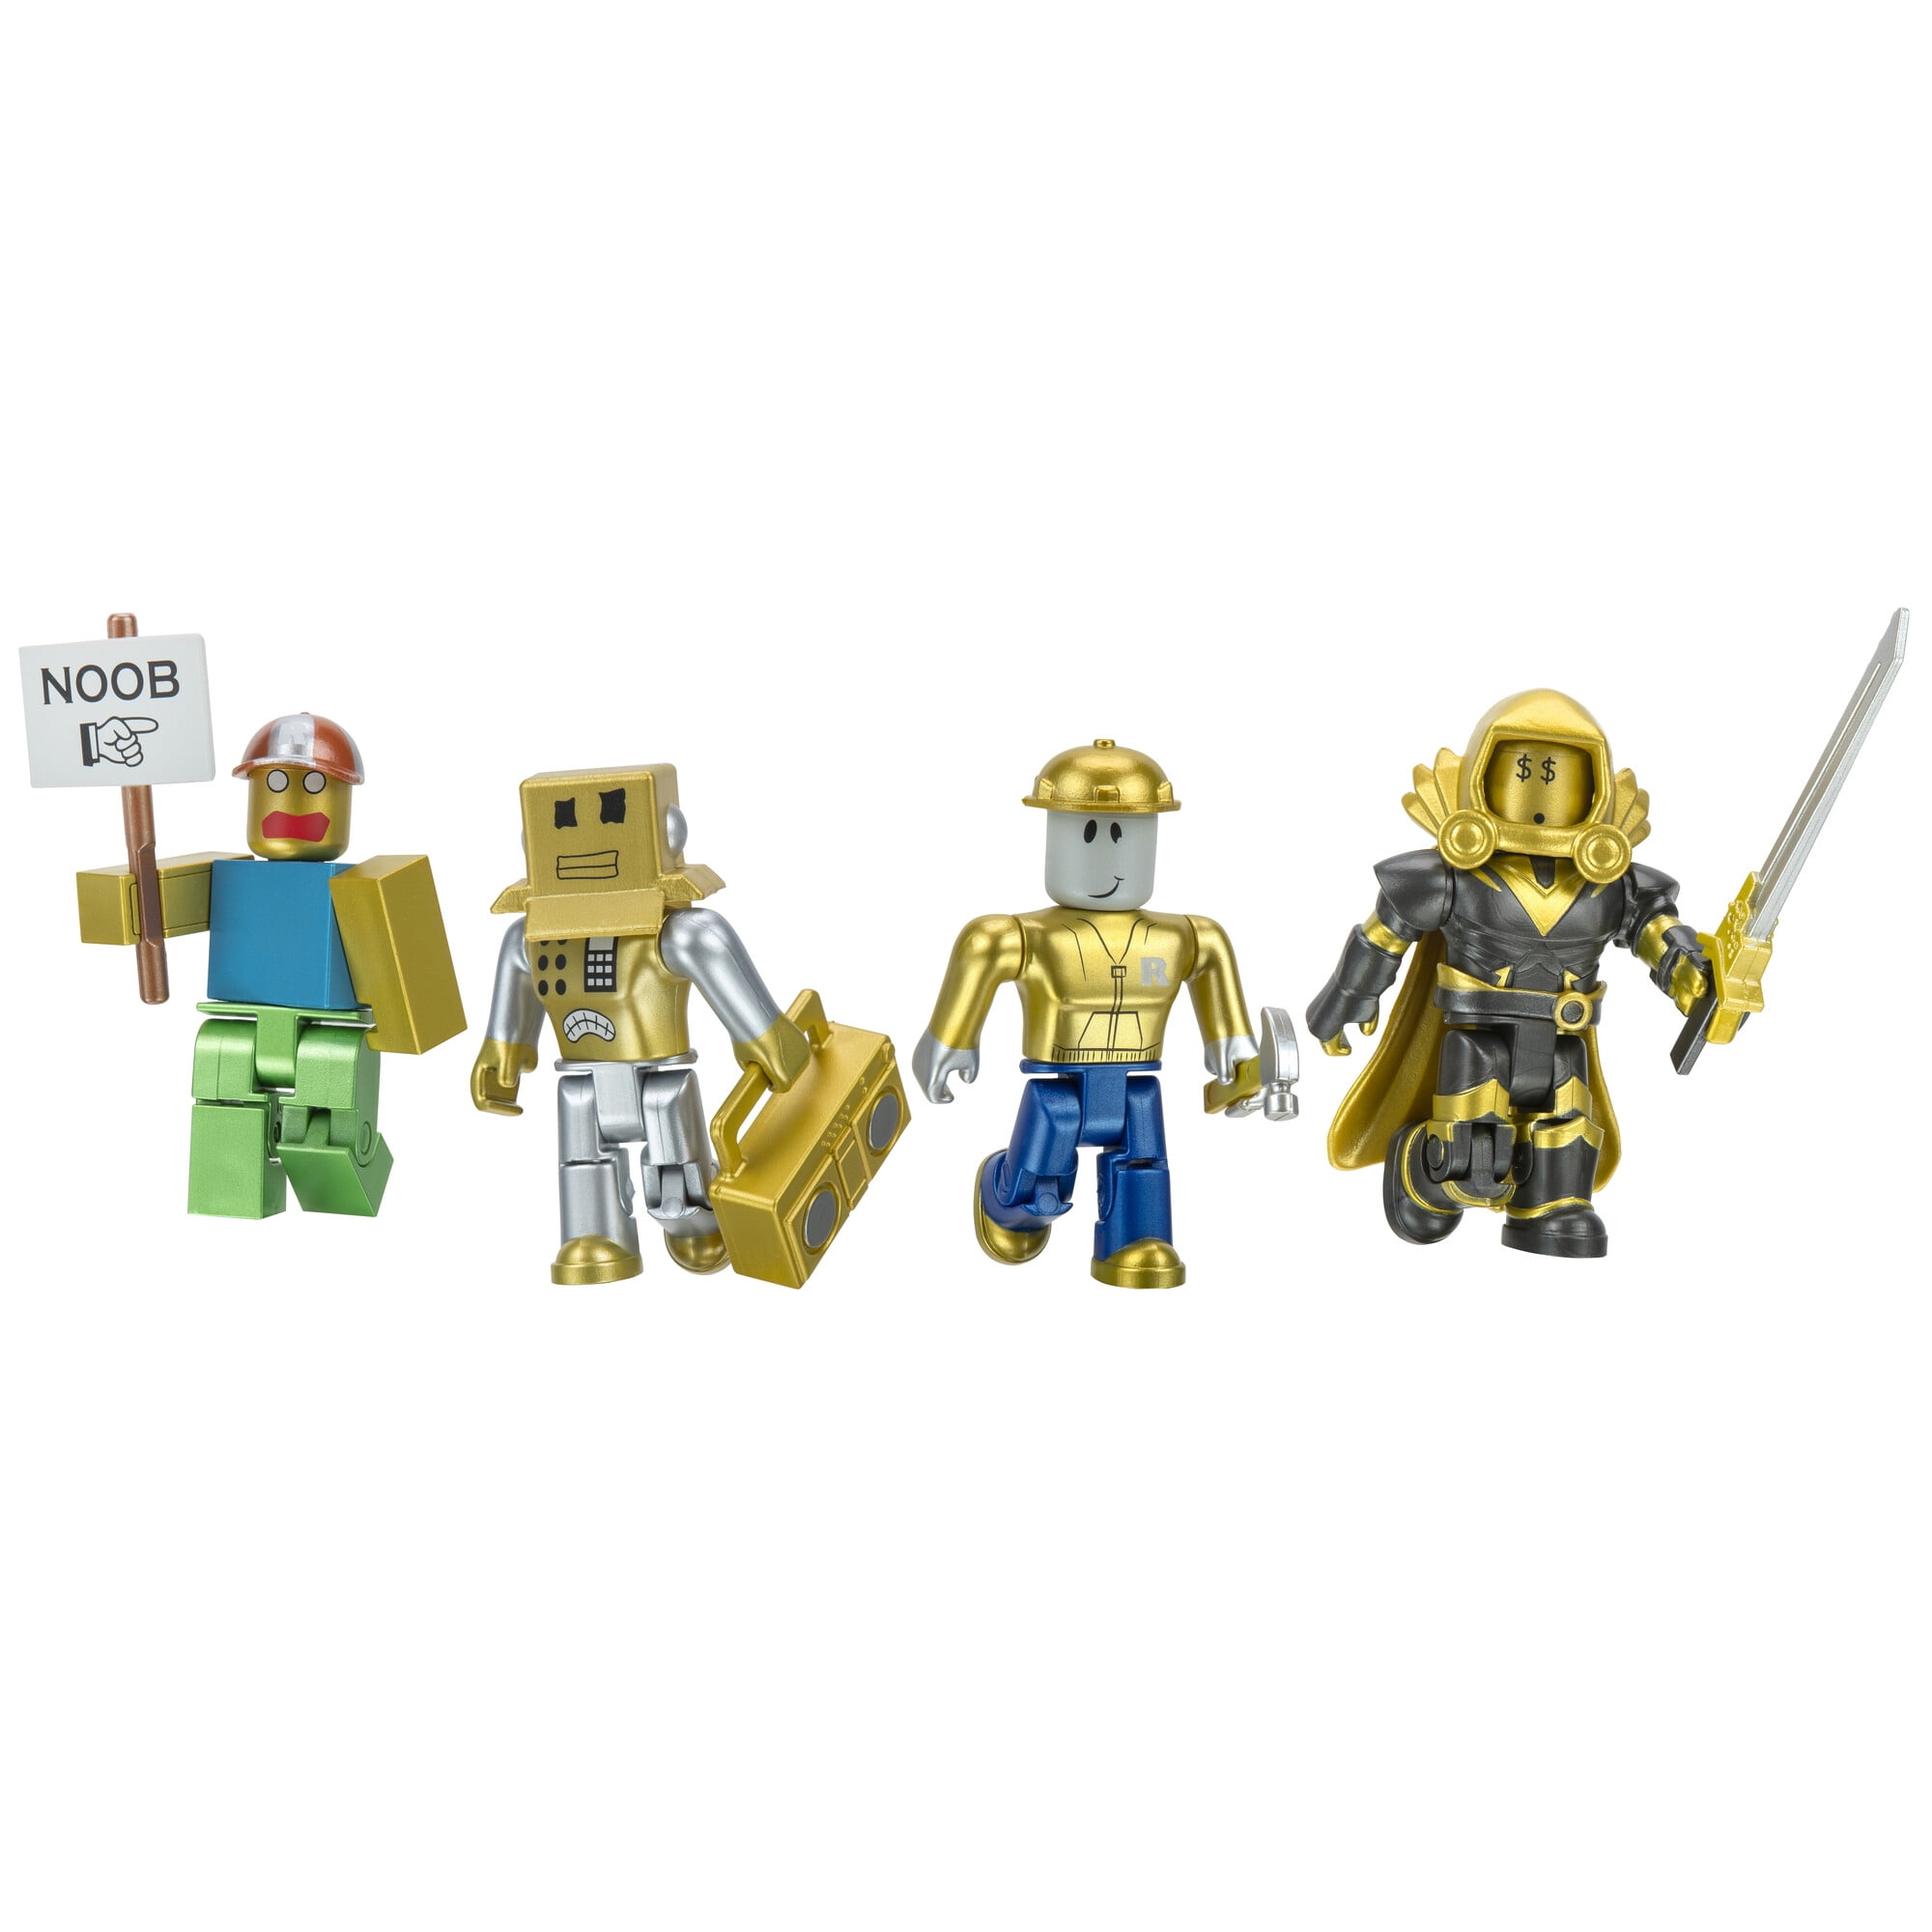 Roblox Icons Gold Collectors Dominus Aureus Dude Figure With Sword Toy